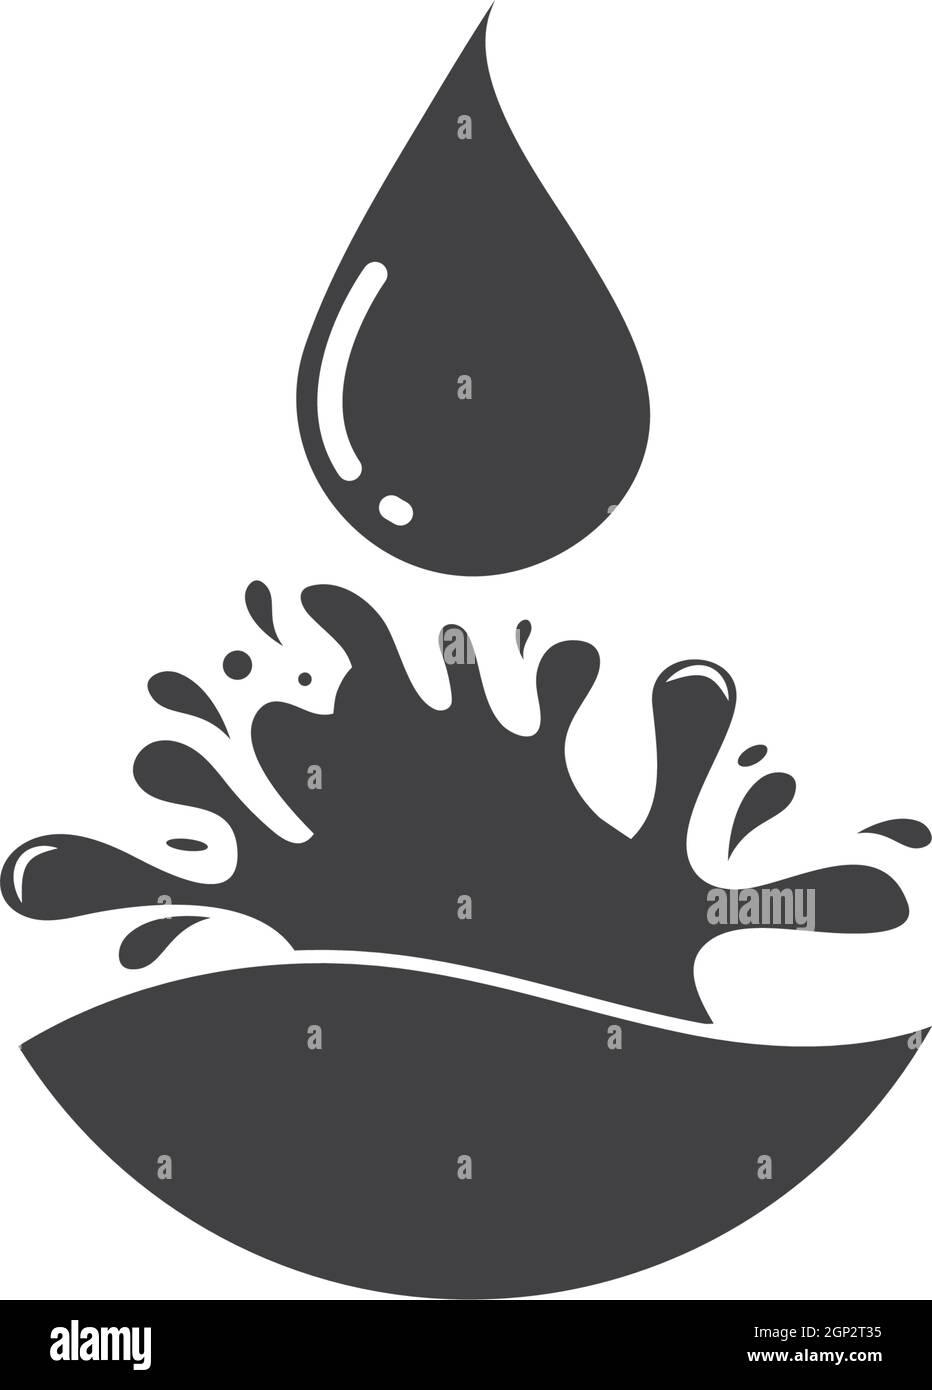 water drop Logo Template vector illustration Stock Vector